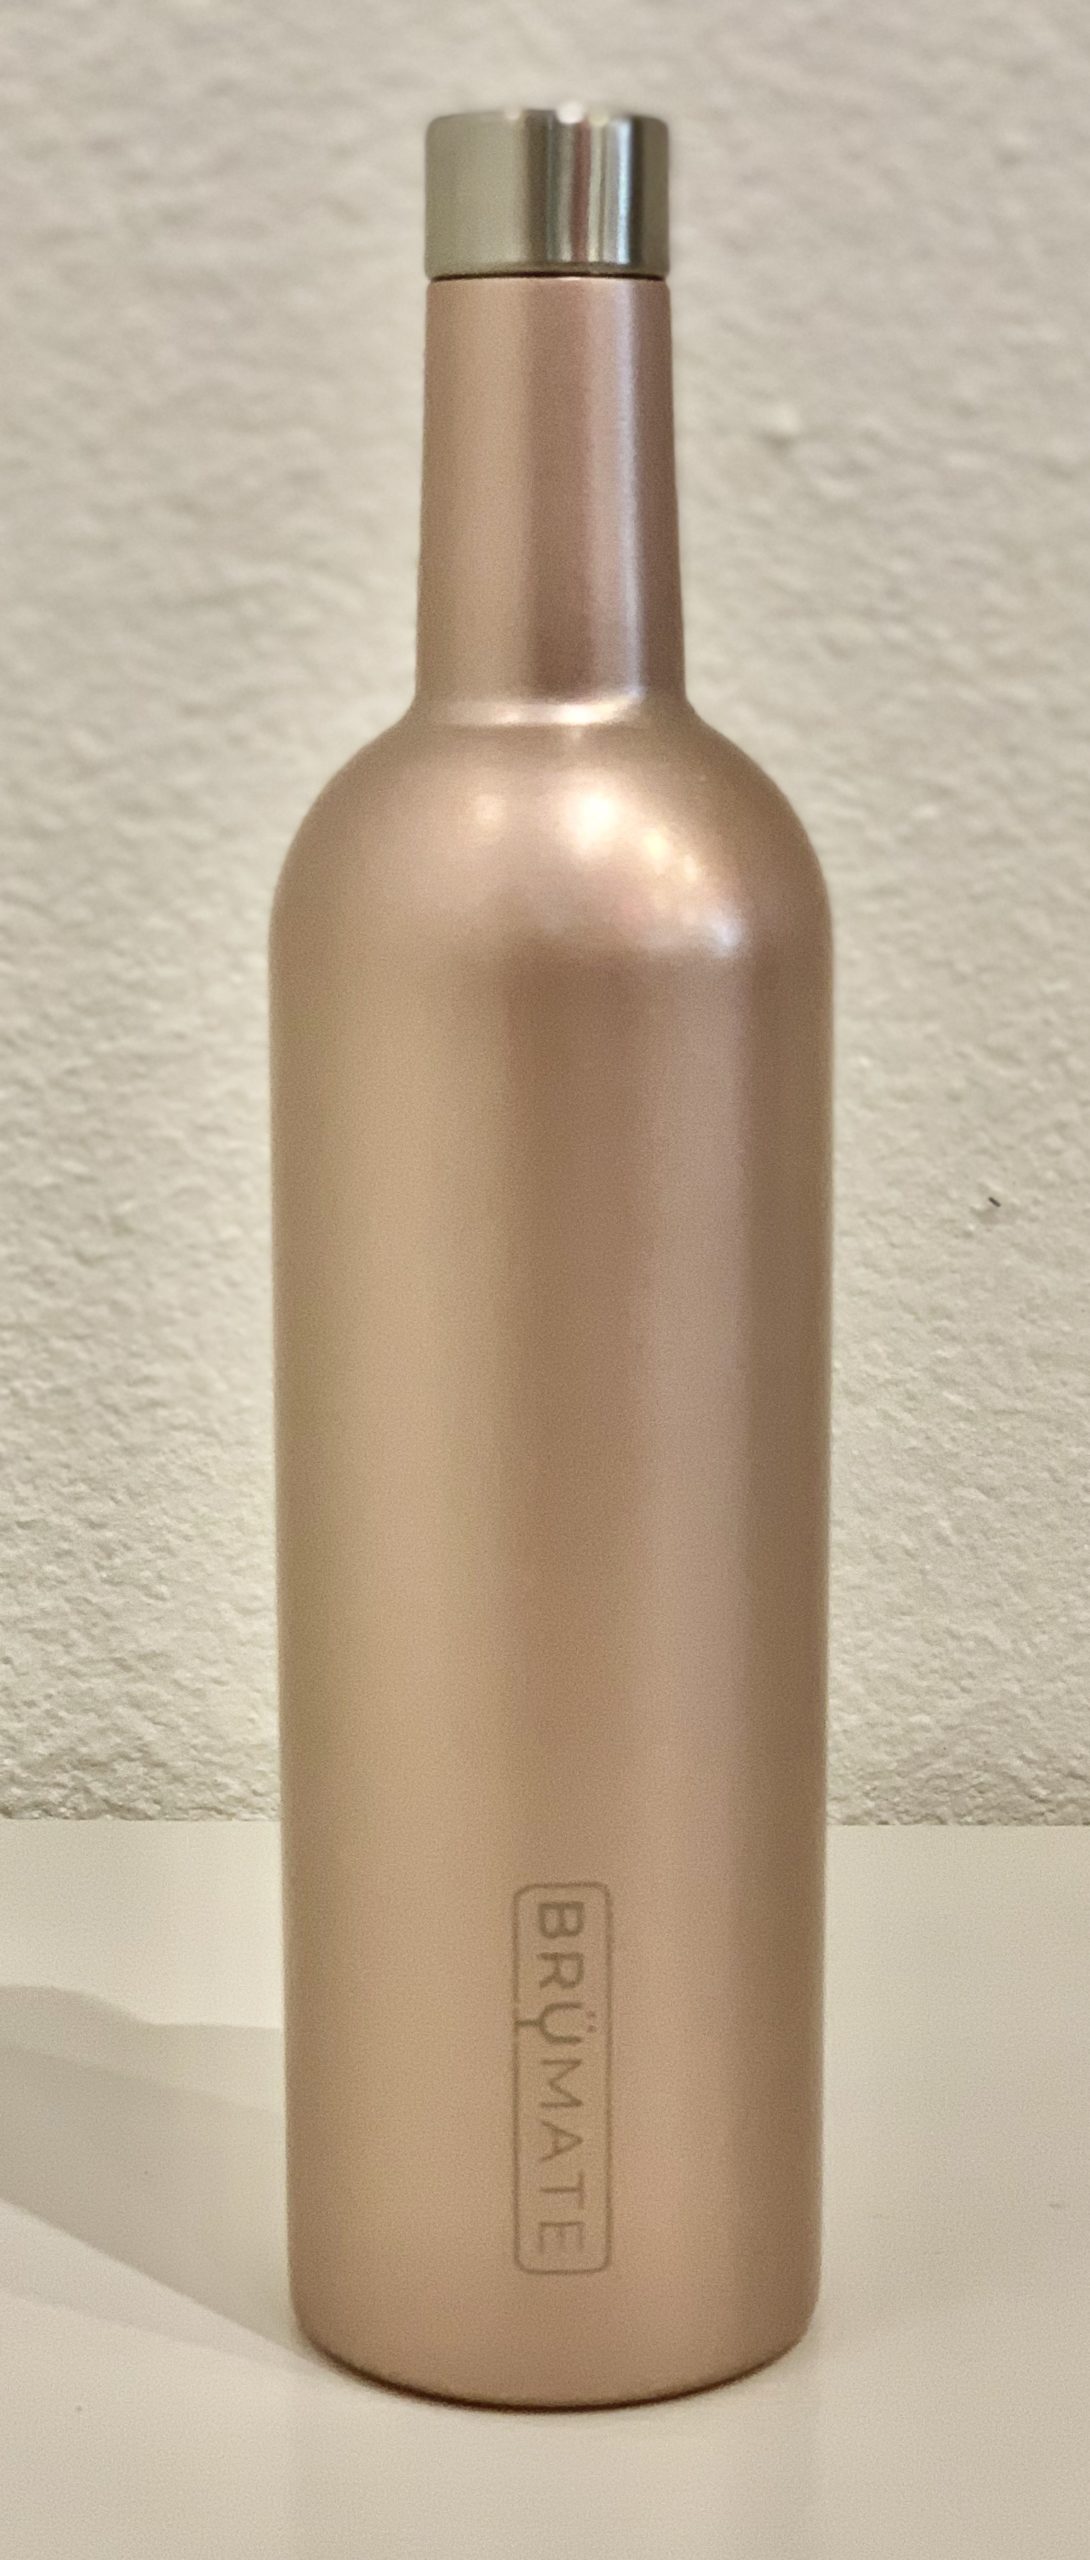 Brümate Winesulator – Sparkles